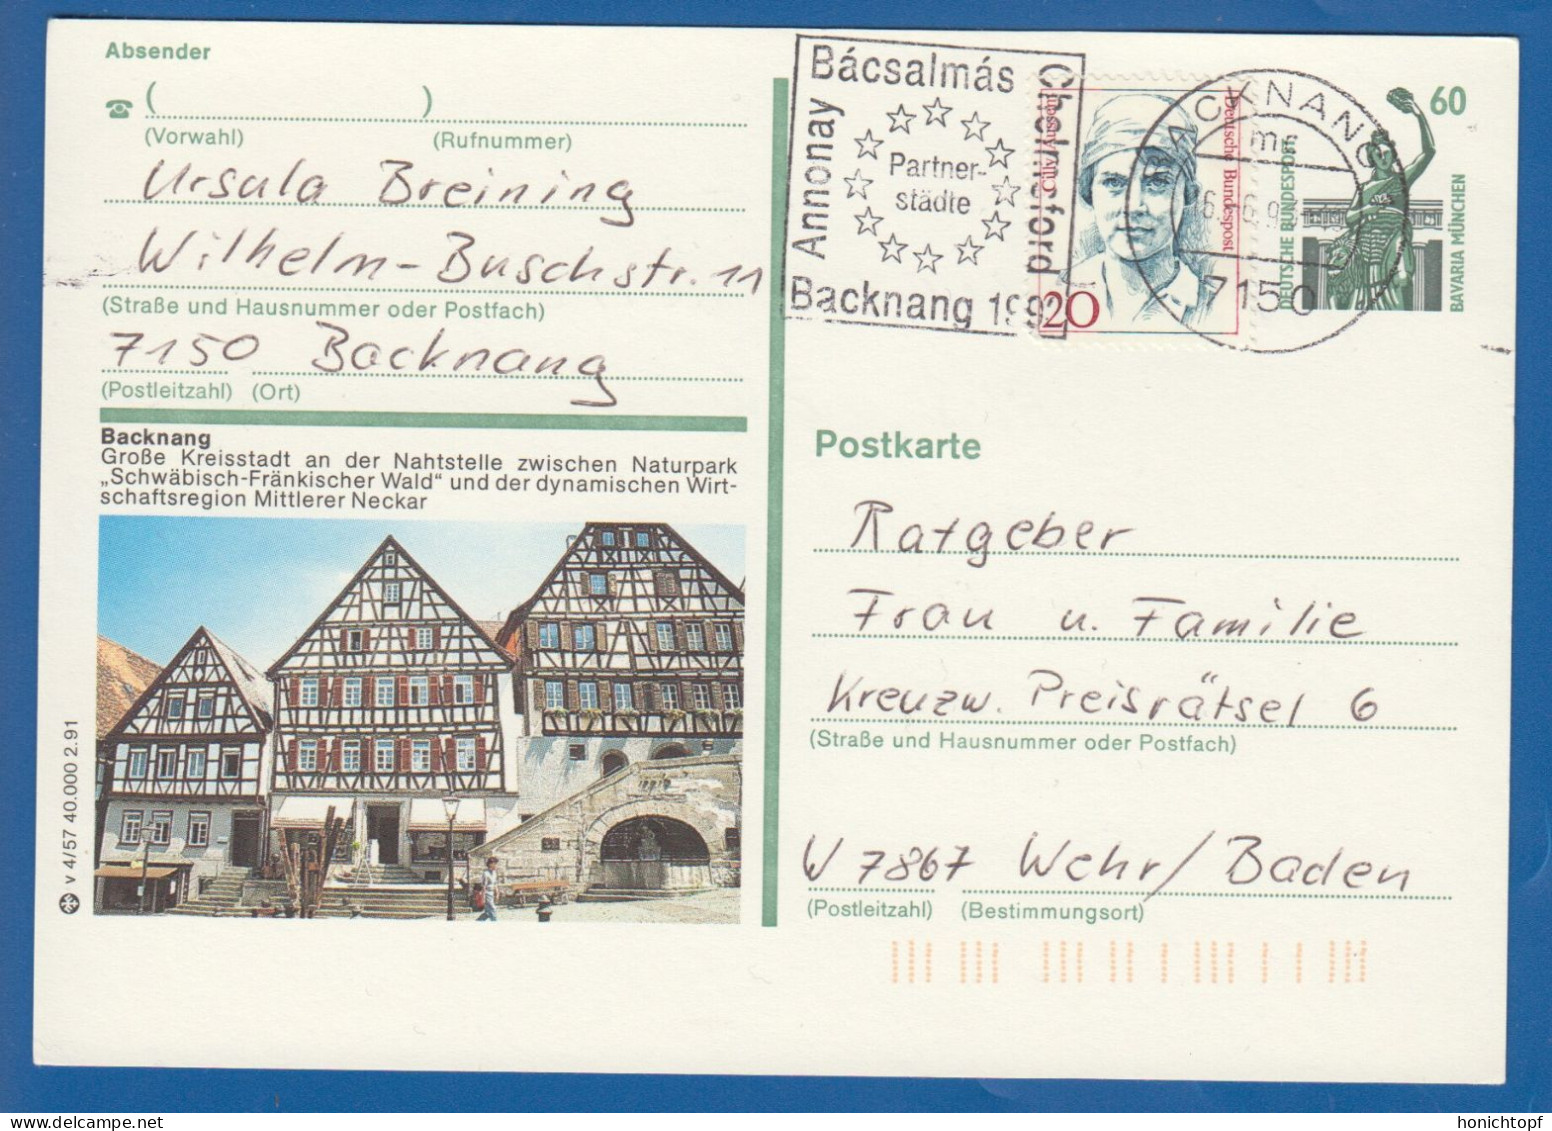 Deutschland; BRD; Postkarte; 20+60 Pf Bavaria München Und Cilly Aussem; Backnang;1993 - Illustrated Postcards - Used